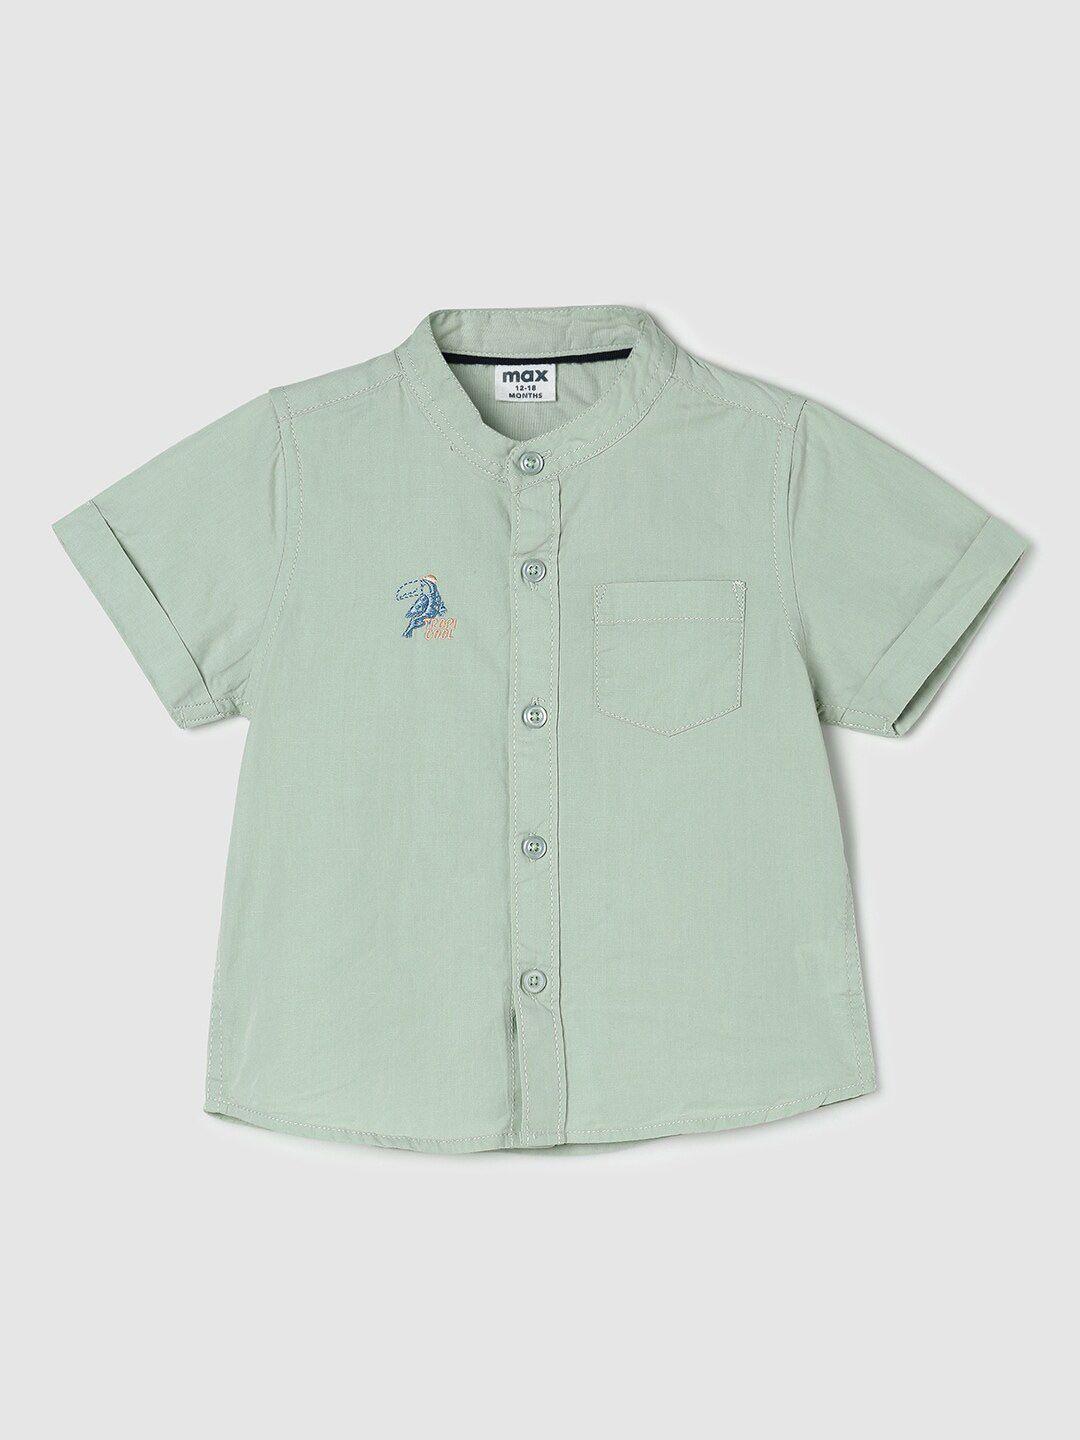 max-infant-boys-mandarin-collar-cotton-casual-shirt